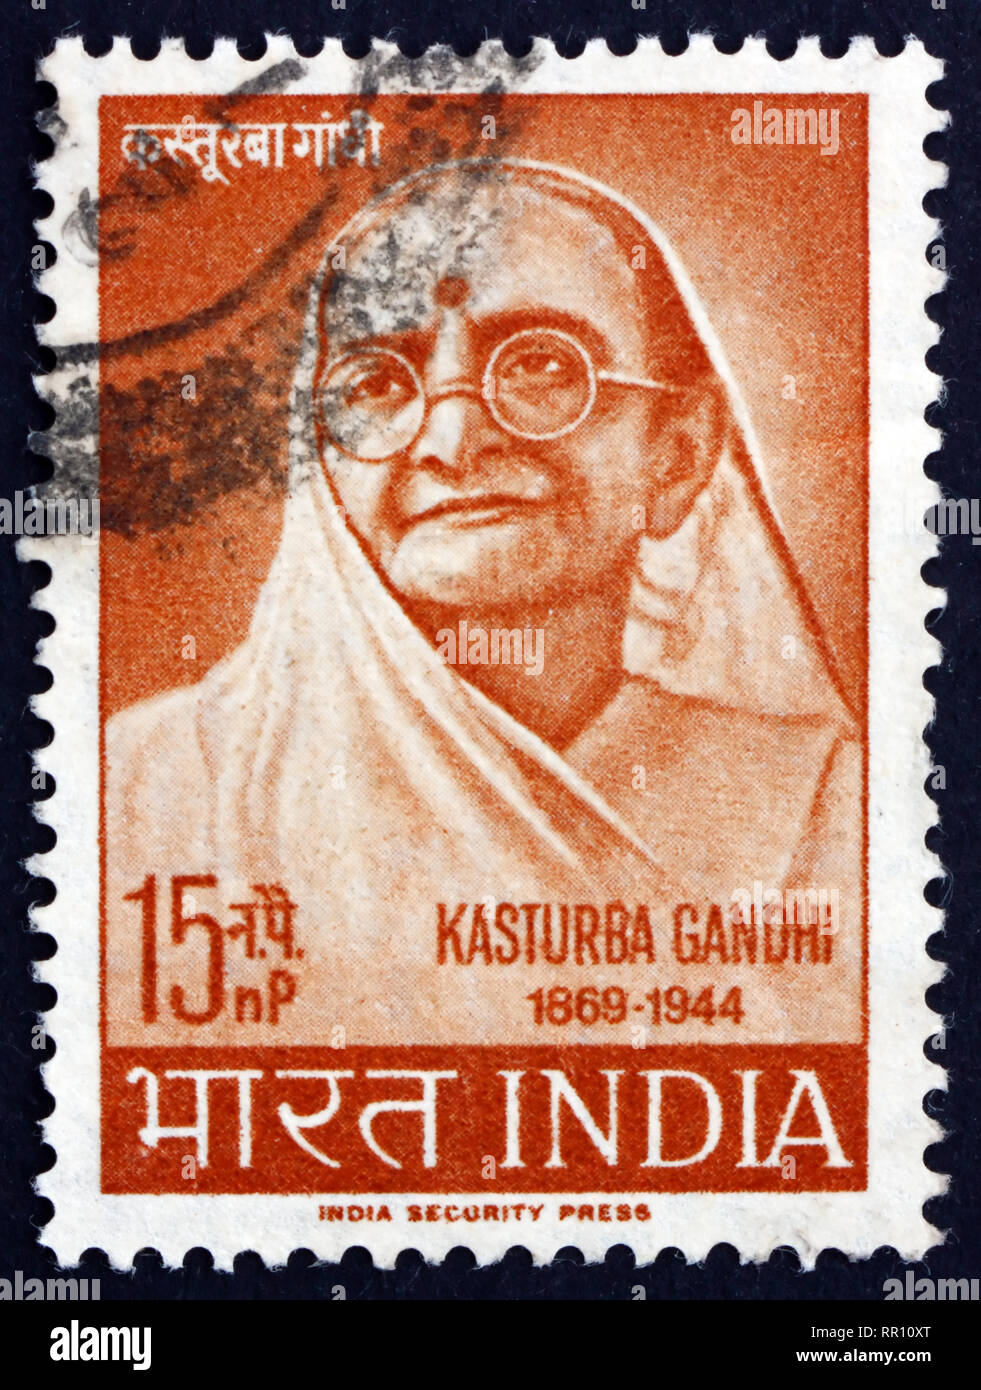 INDIA - CIRCA 1964: a stamp printed in India shows Kasturba Gandhi, Wife of Mahatma Gandhi, circa 1964 Stock Photo